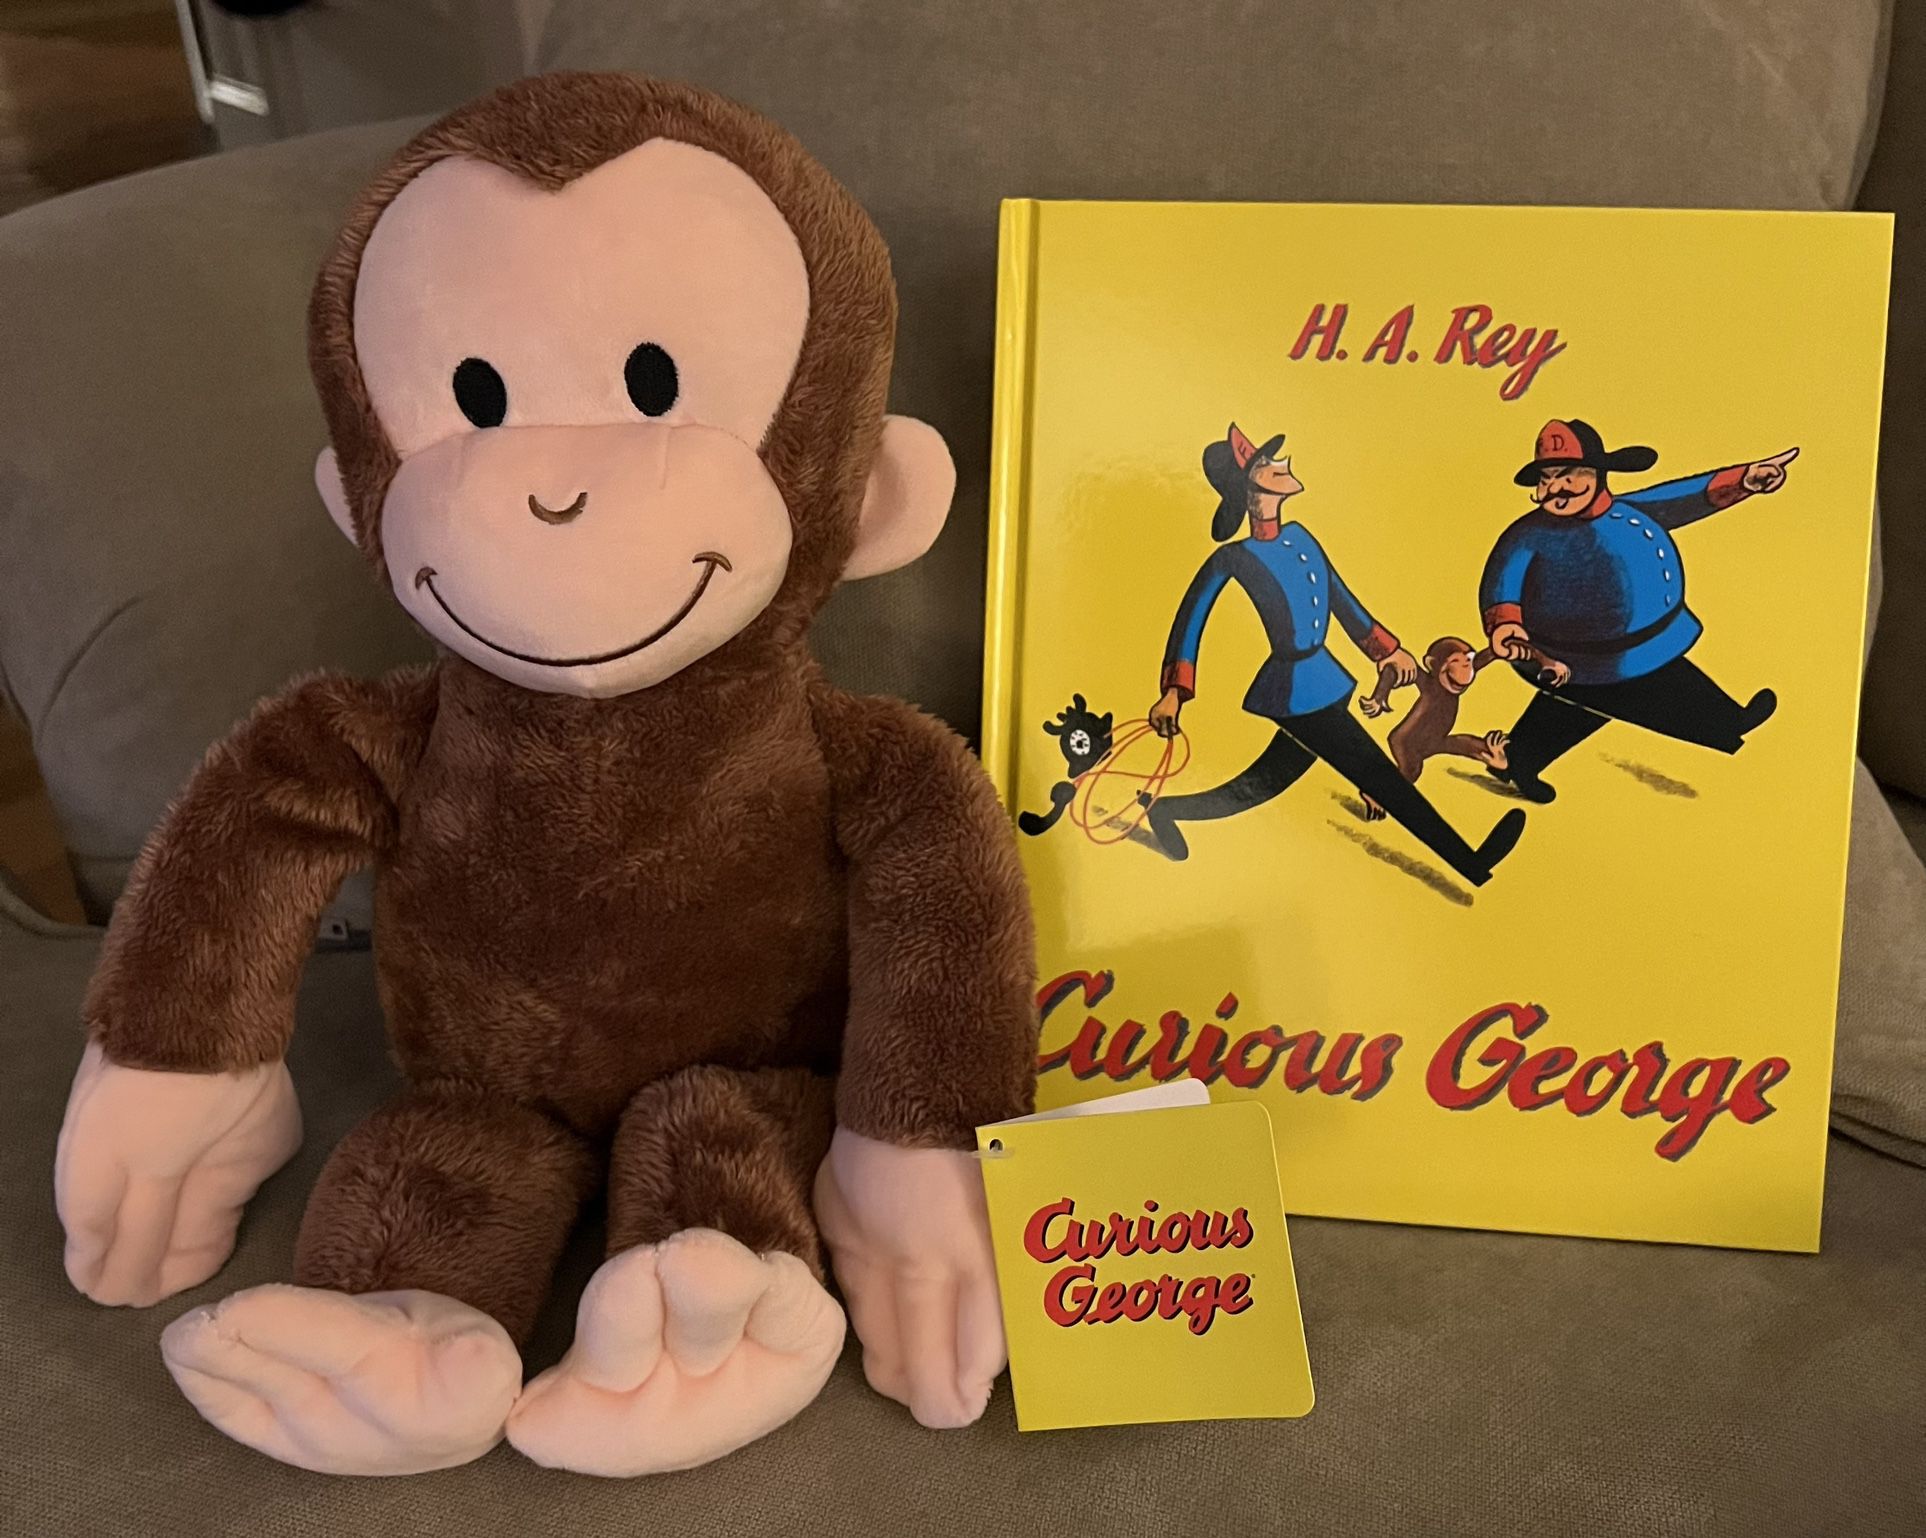 Curious George Stuffed Animal & Book